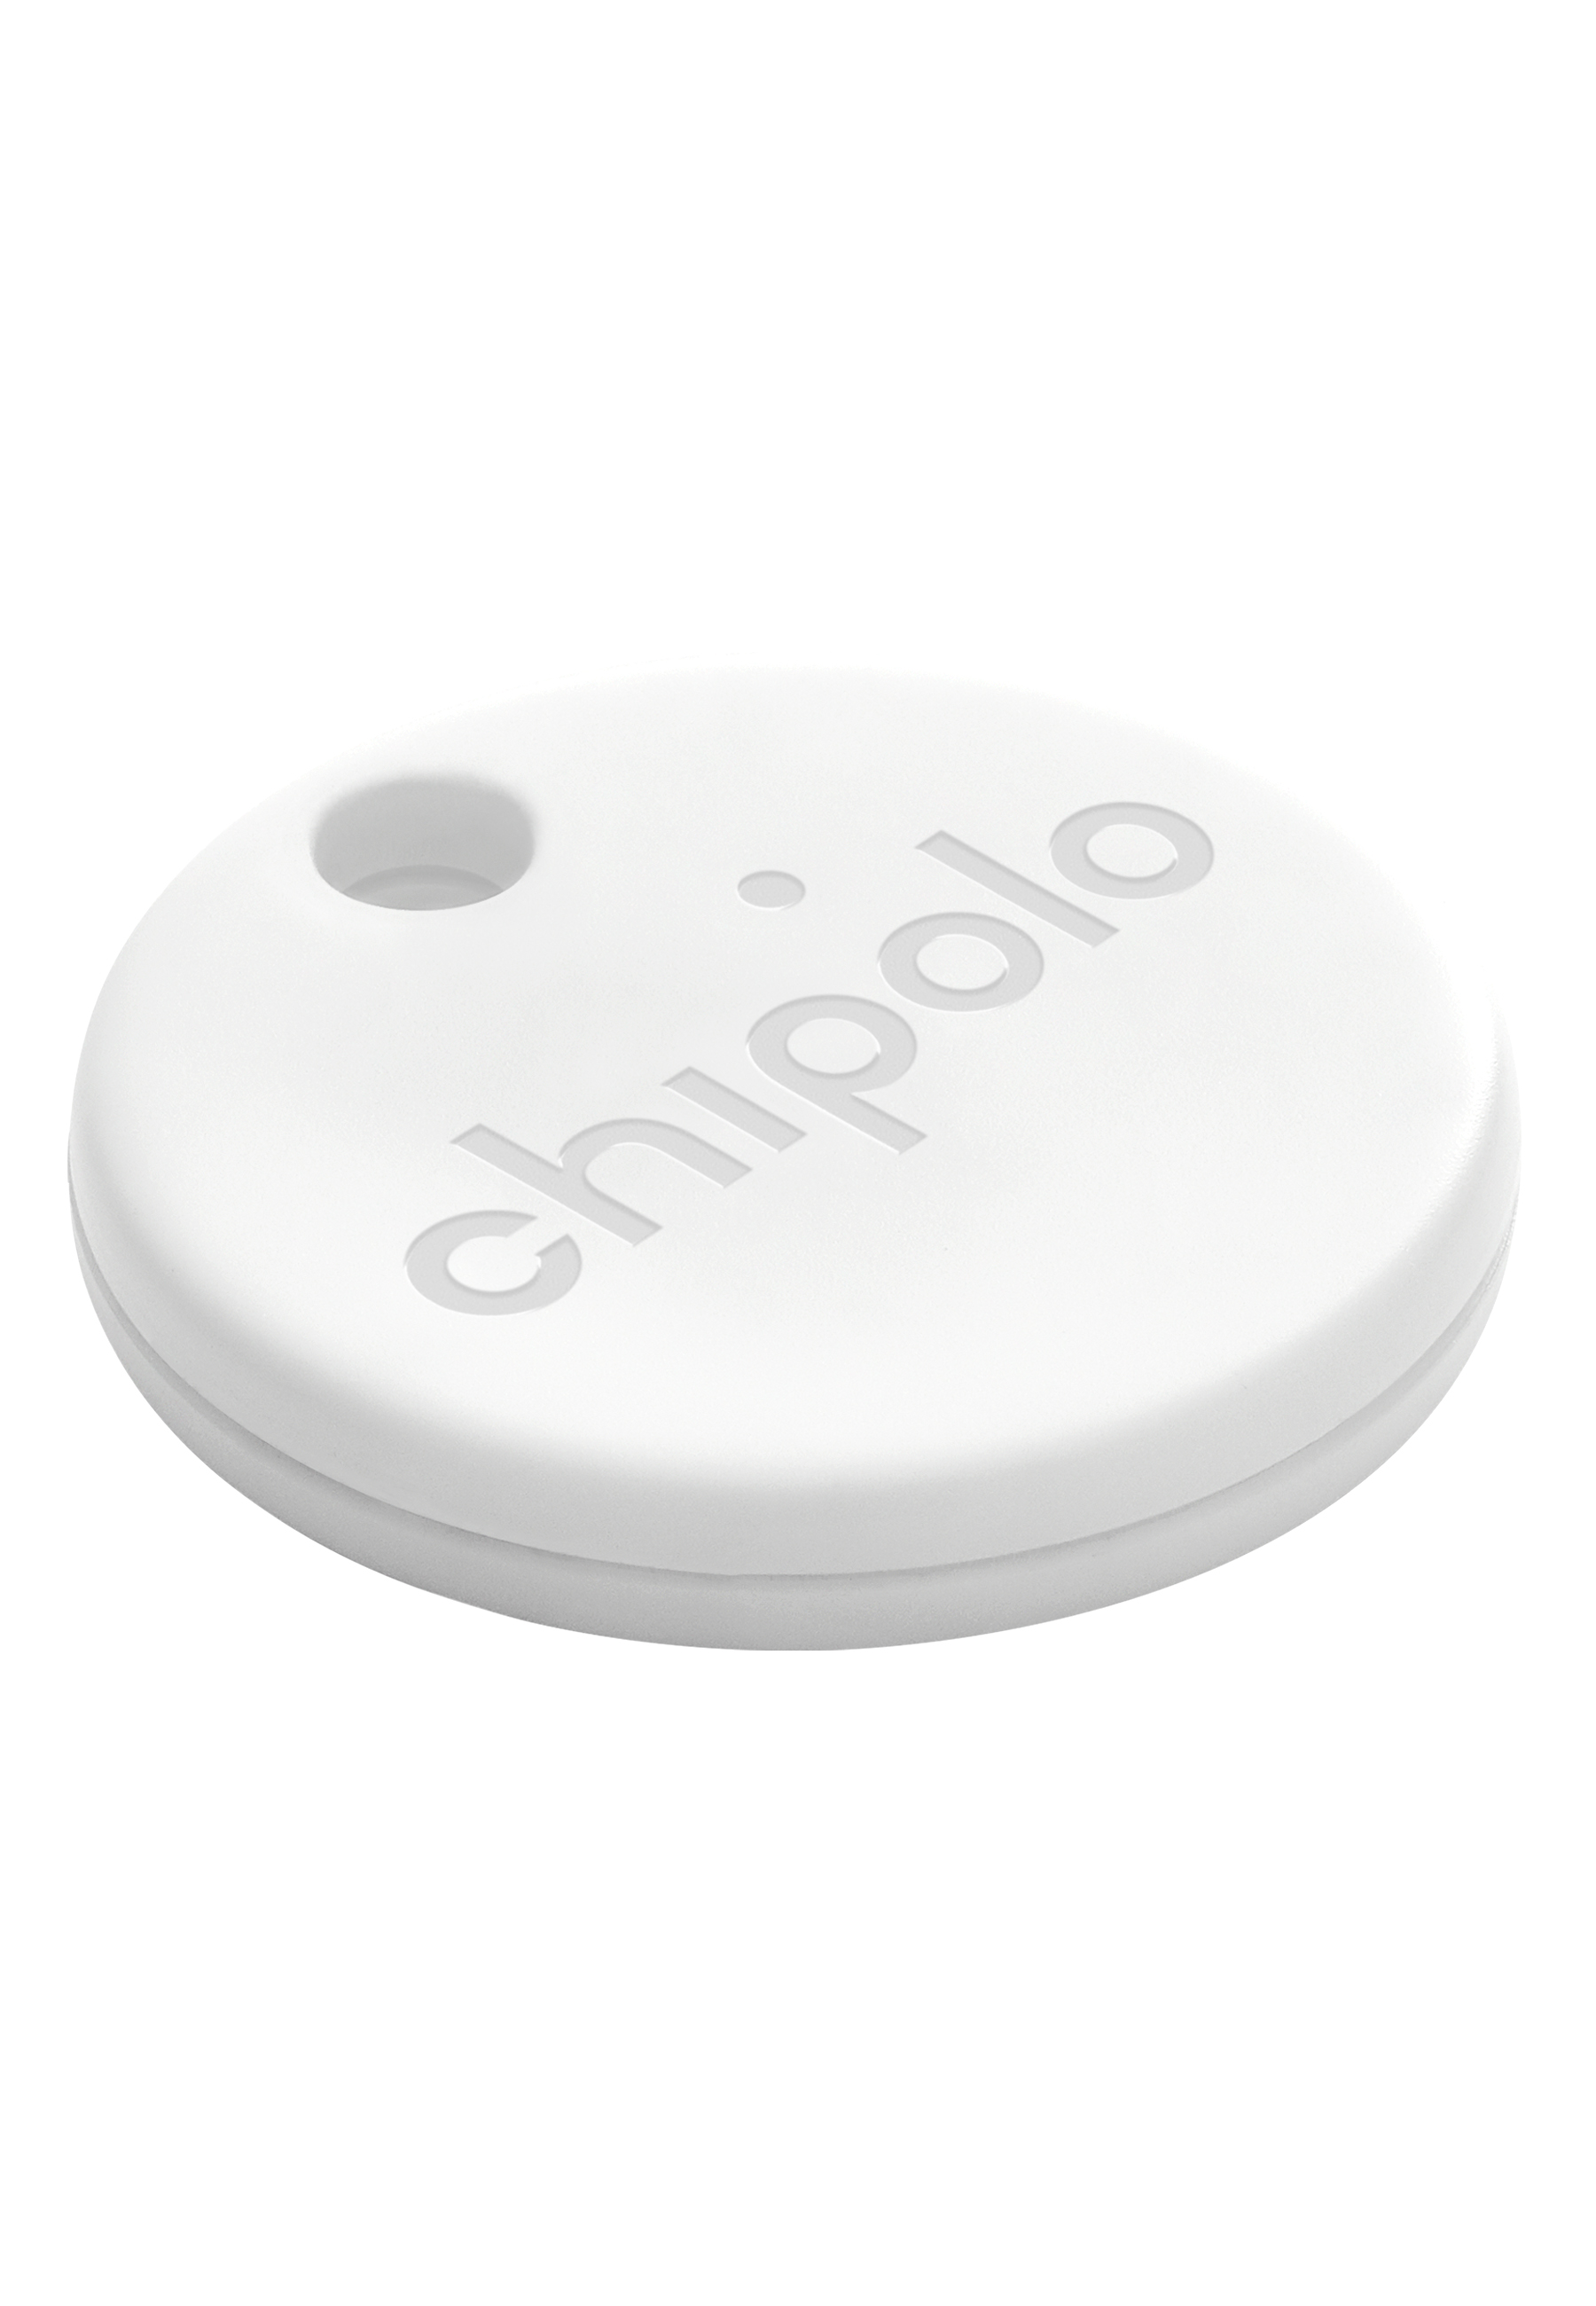 CHIPOLO -WE-R Bluetooth Tracker